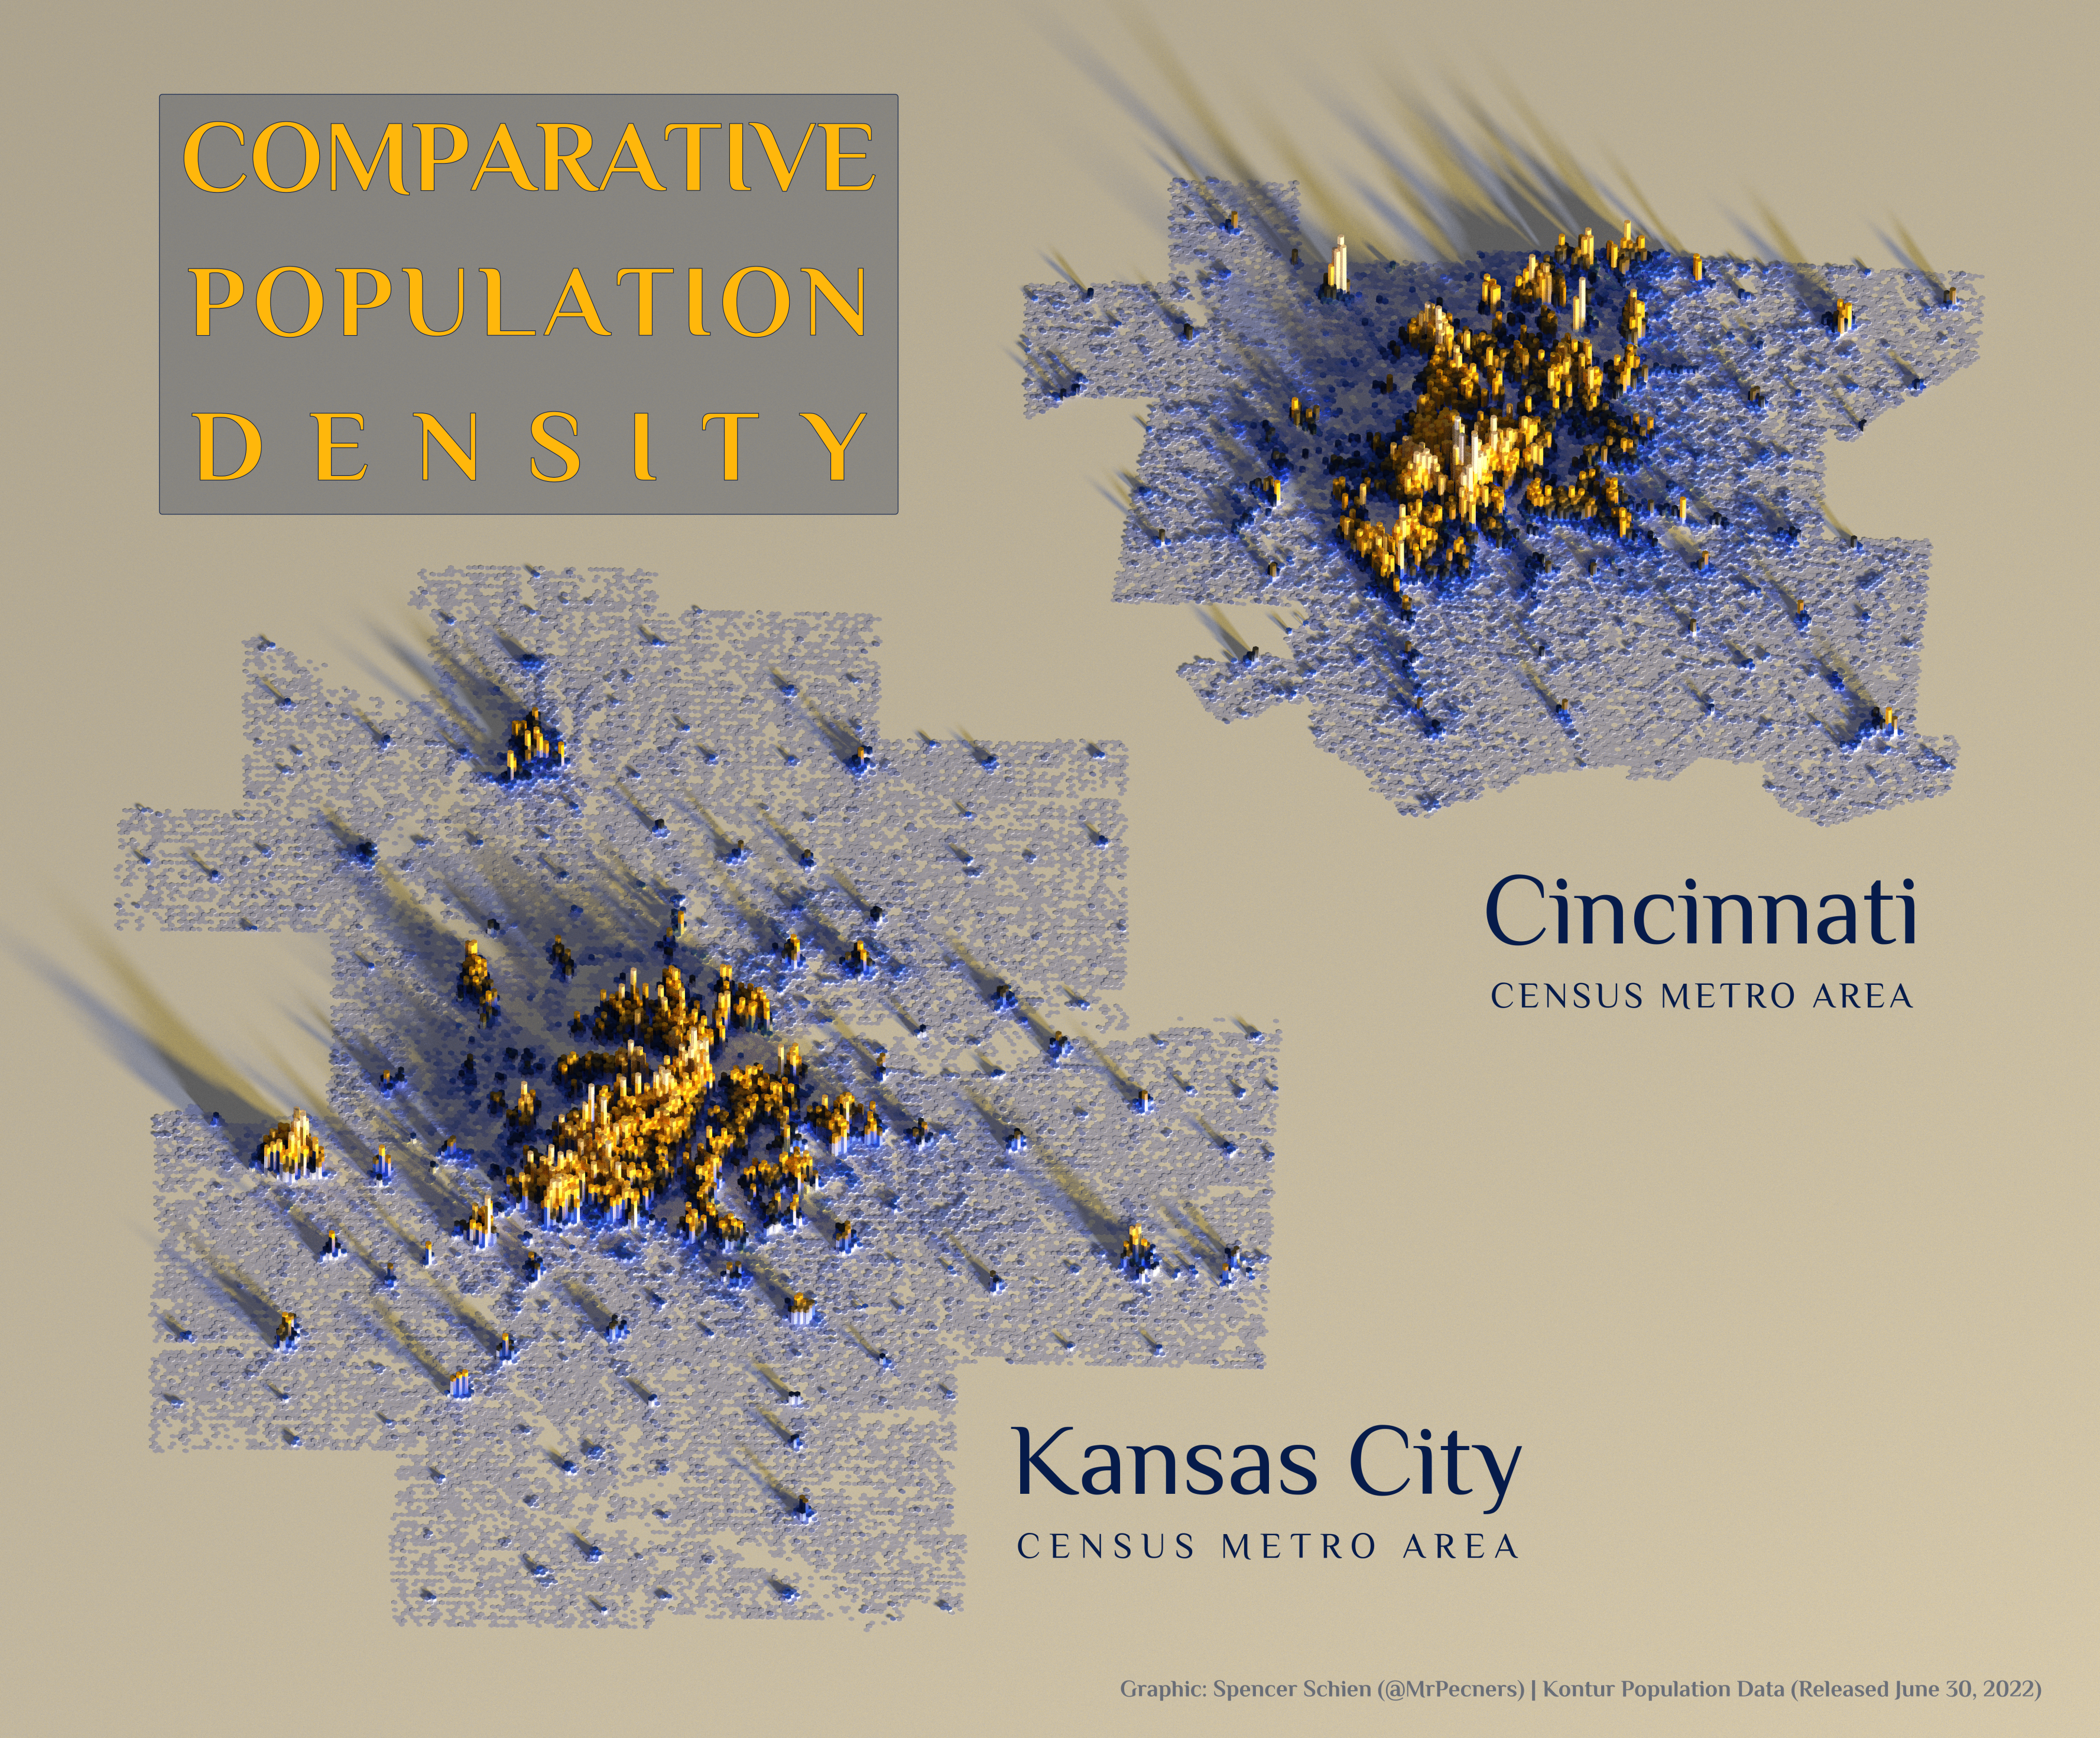 Comparative Population Density: Cincinnati and Kansas City